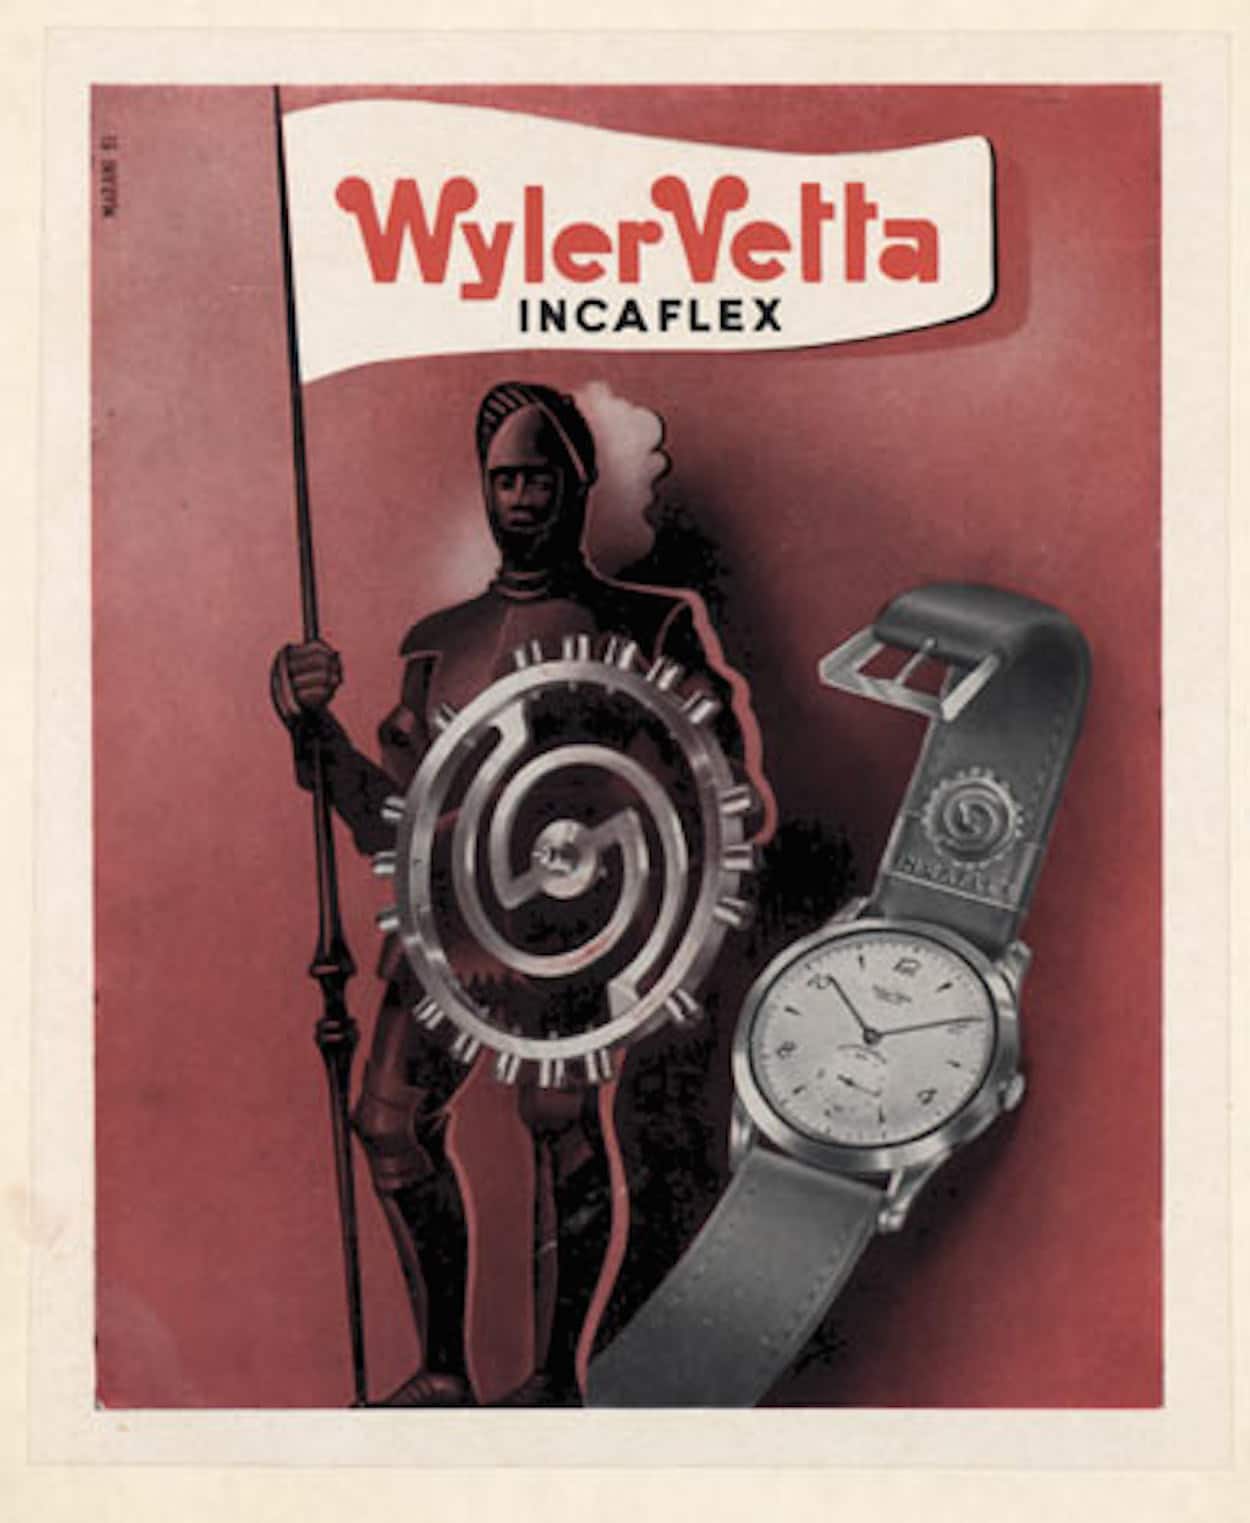 Wyler Vetta Rare Incaflex 18k 纯金 / Cal 32 / 复古 1960 年代